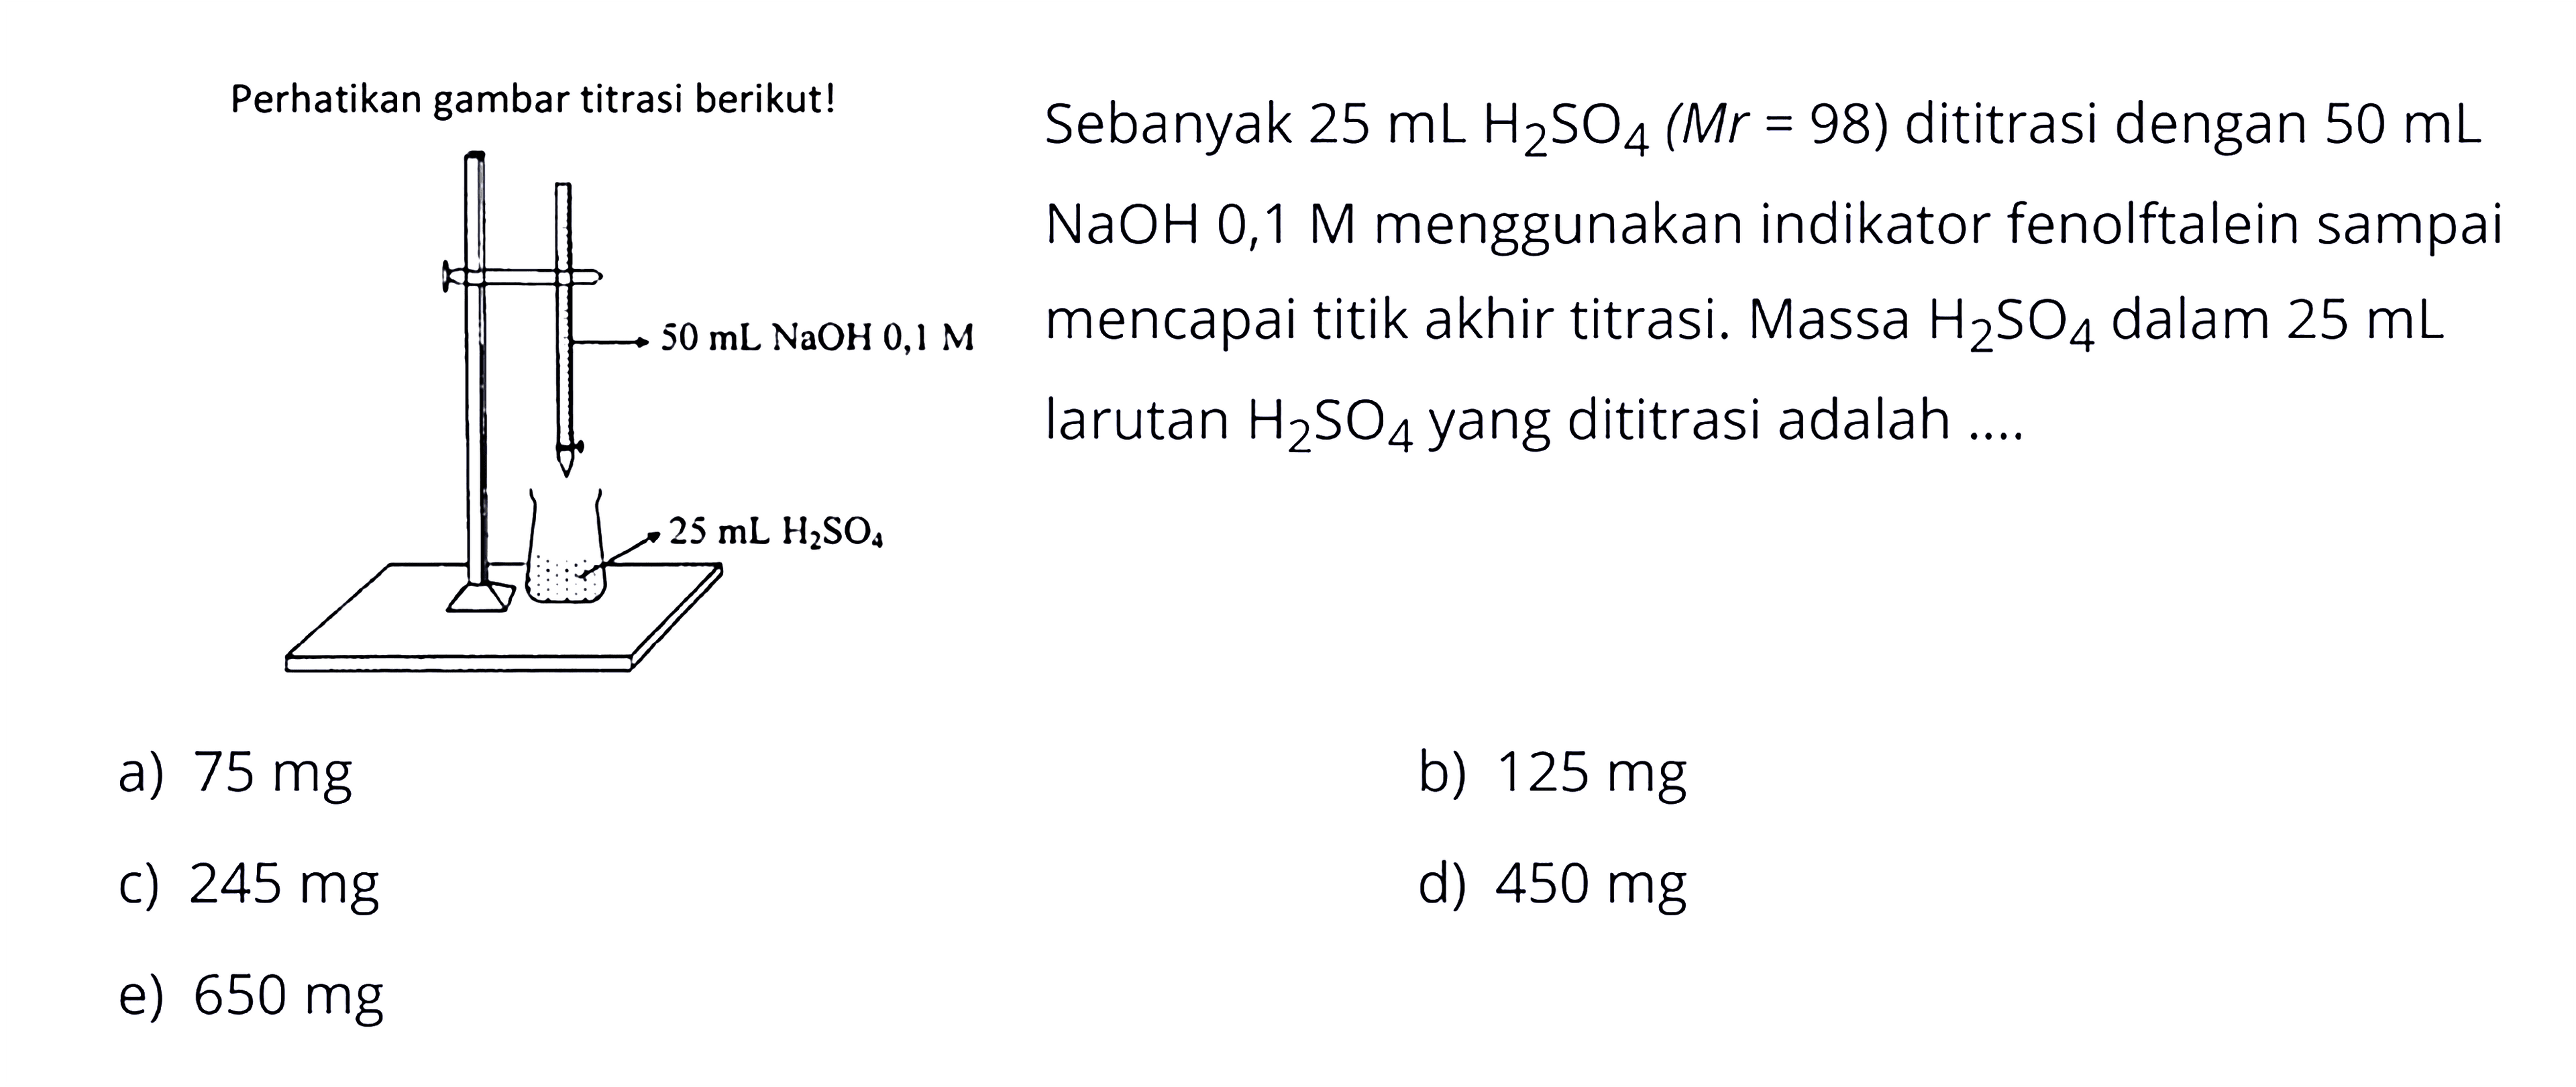 Perhatikan gambar titrasi berikut!  Sebanyak 25mL H2SO4(Mr=98) dititrası dengan 50mL NaOH 0,1 M menggunakan indikator fenolftalein sampai mencapai titik akhir titrasi. Massa H2SO4 dalam 25 mL larutan H2SO4 yang dititrasi adalah... 